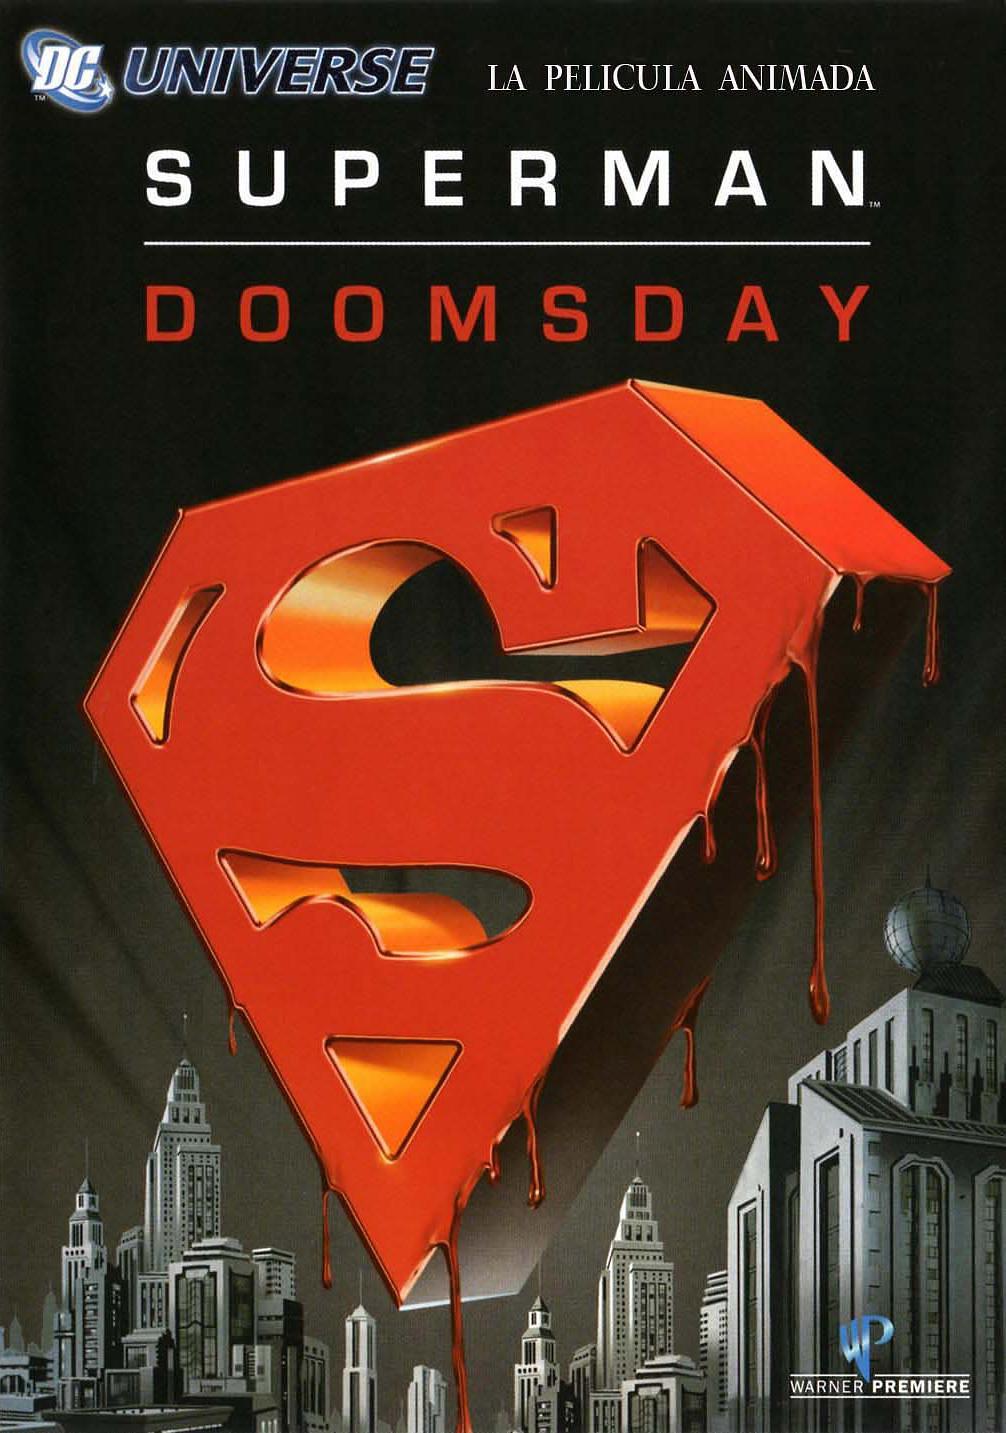 超人之死 Superman.Doomsday.2007.2160p.BluRay.REMUX.HEVC.DTS-HD.MA.5.1-FGT 28.41GB-1.png